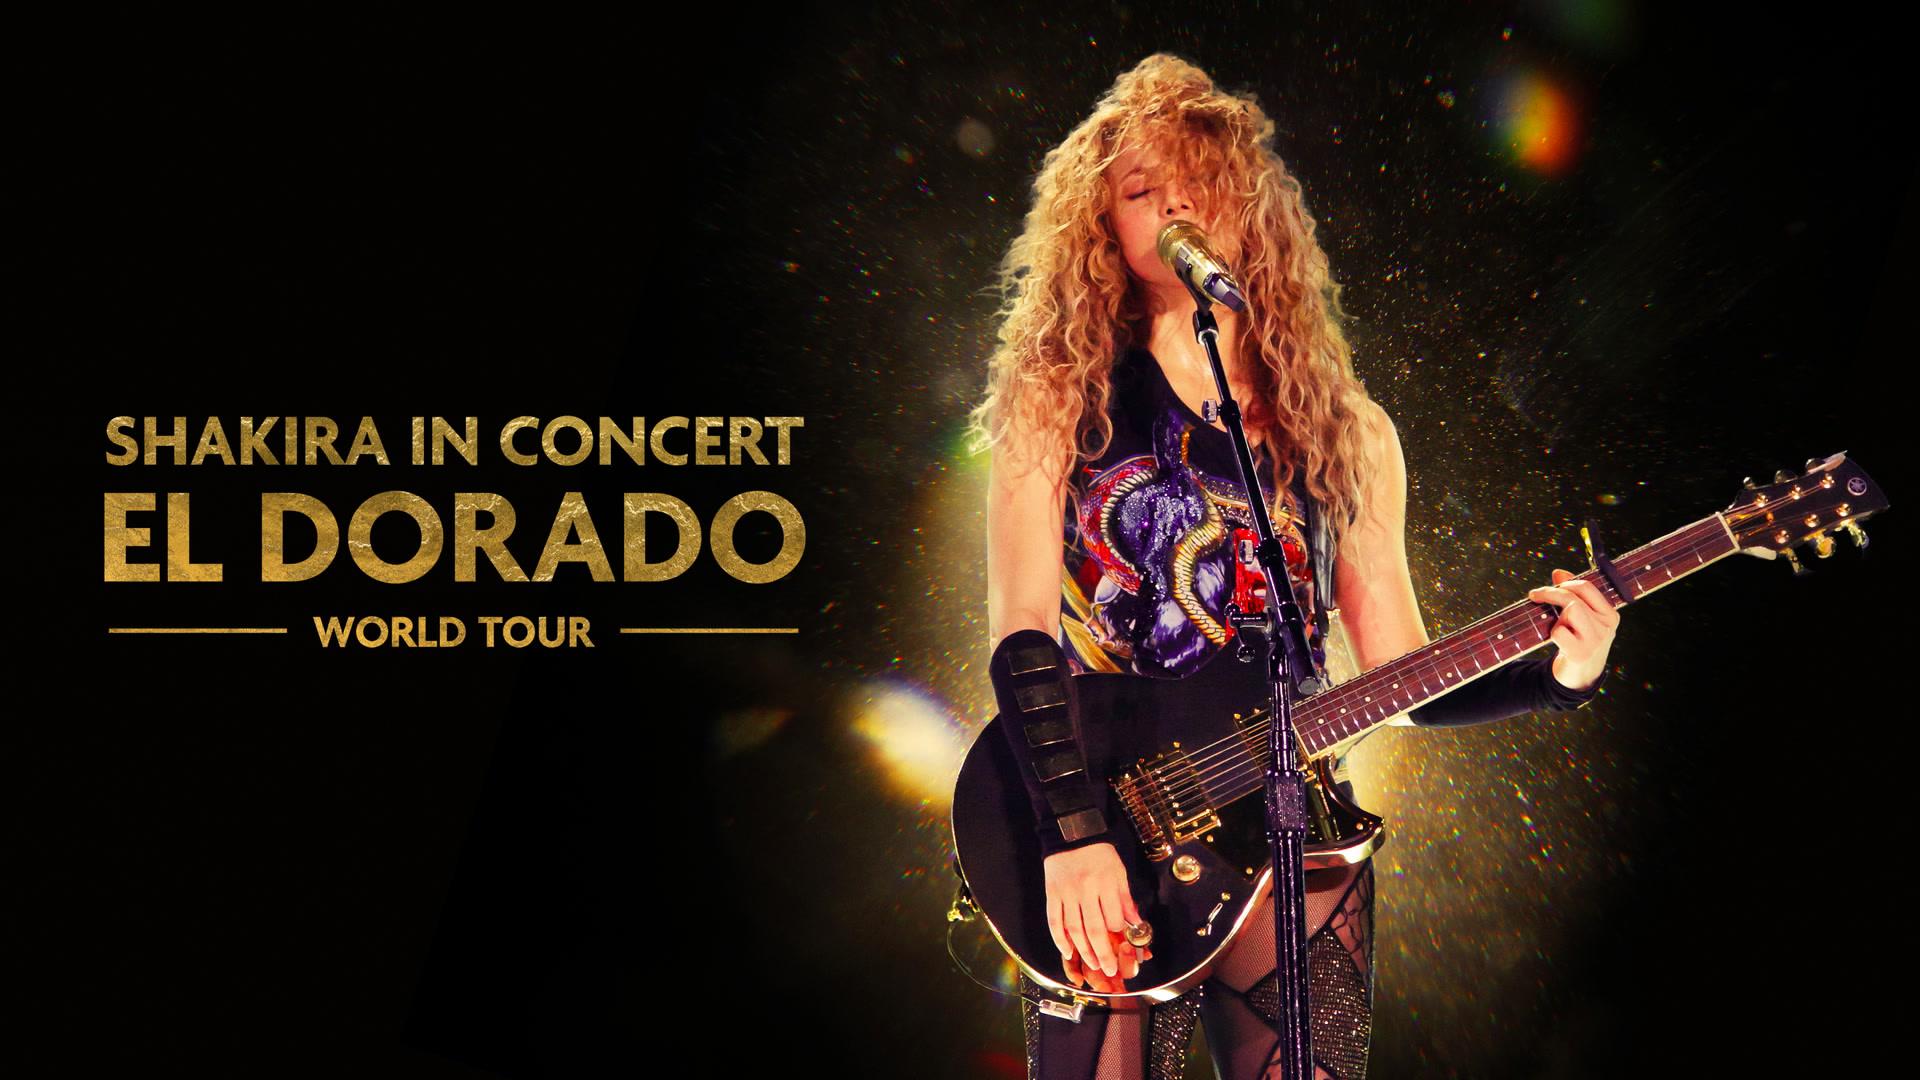 Shakira - Chantaje (Audio - El Dorado World Tour Live)